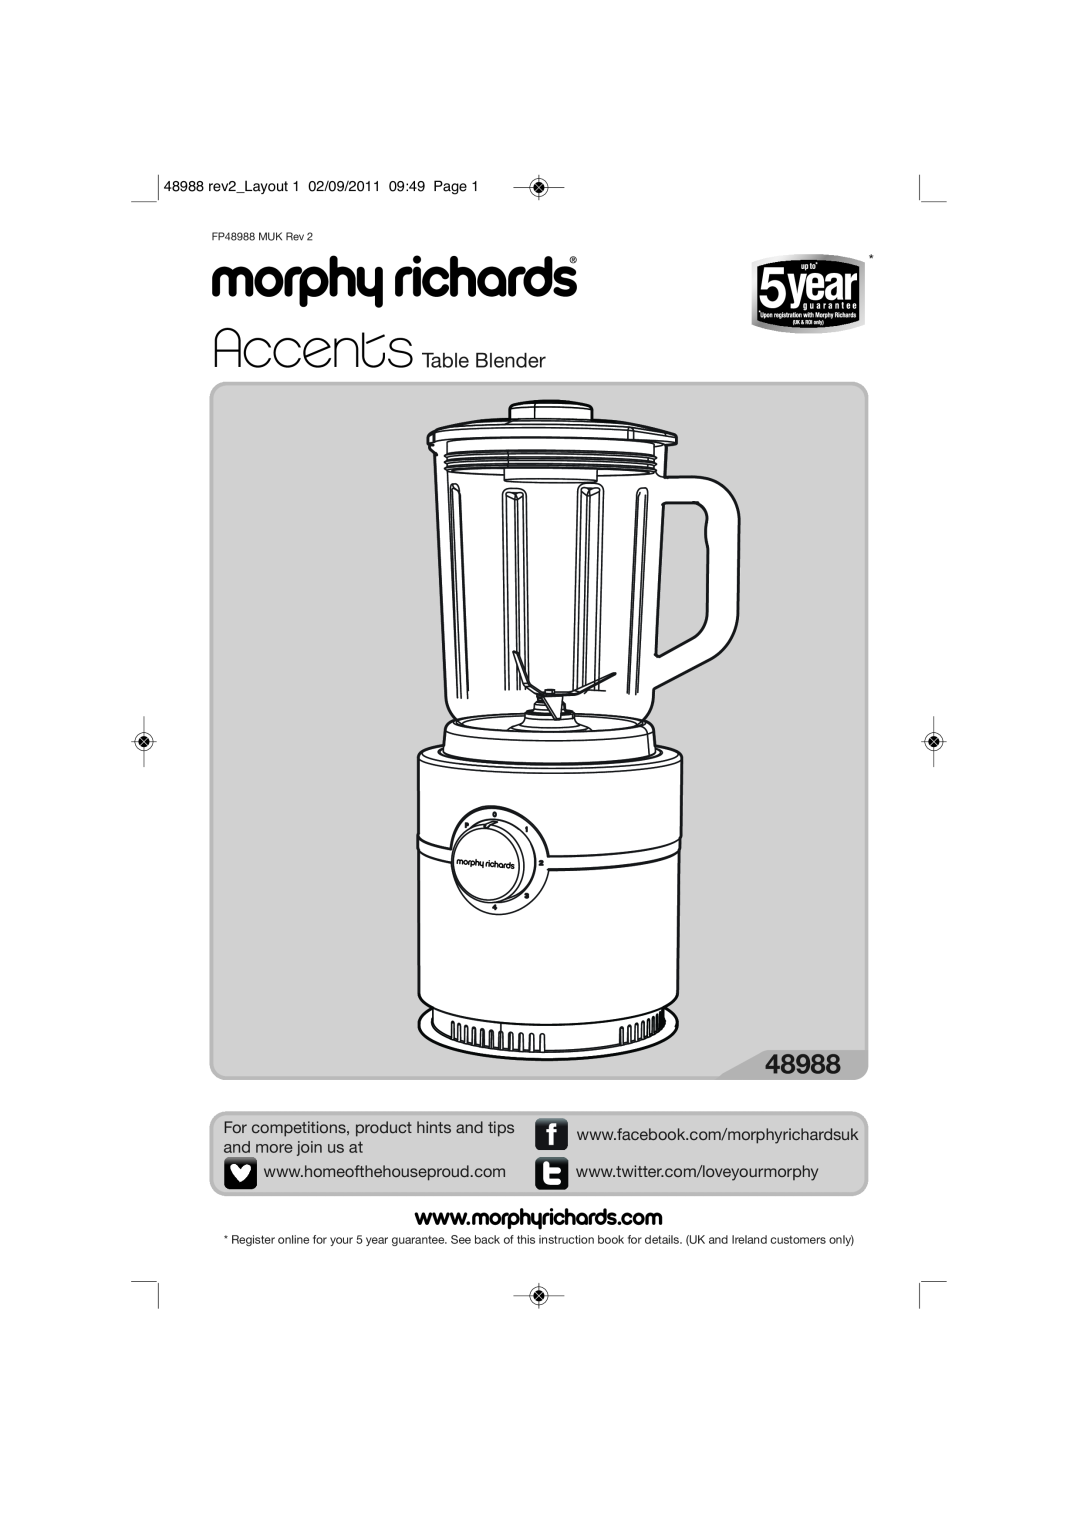 Morphy Richards FP48988 manual 48988 rev2Layout 1 02/09/2011 0949 Page, Table Blender 